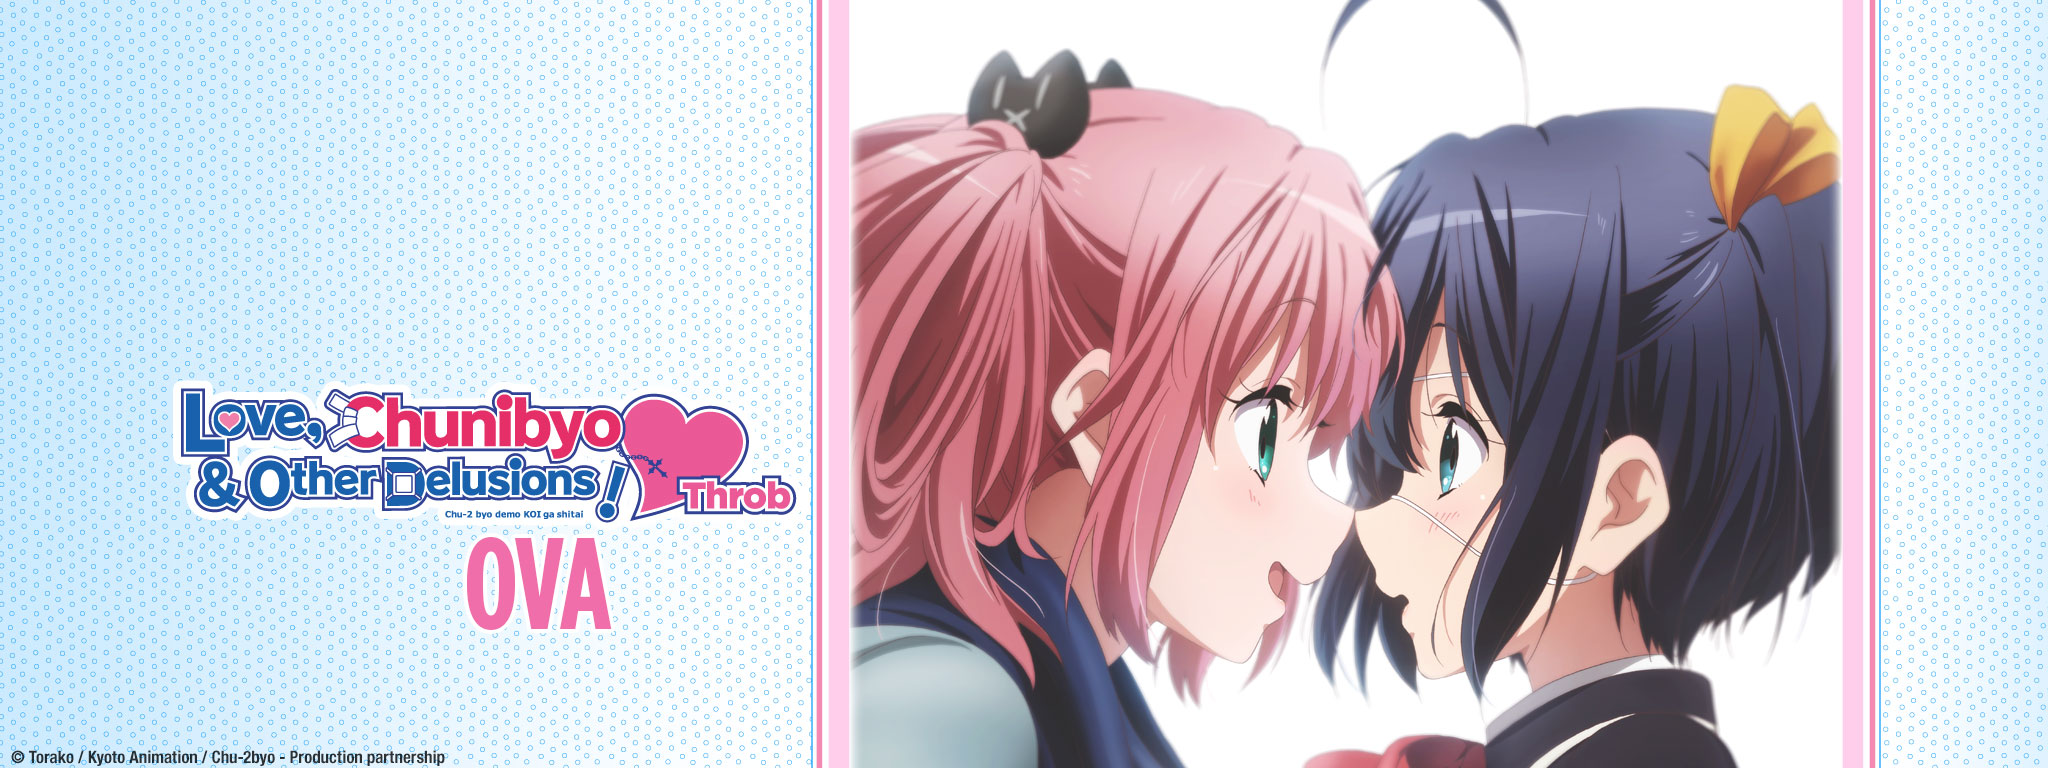 Title Art for Love, Chunibyo & Other Delusions! -Heart Throb - OVA